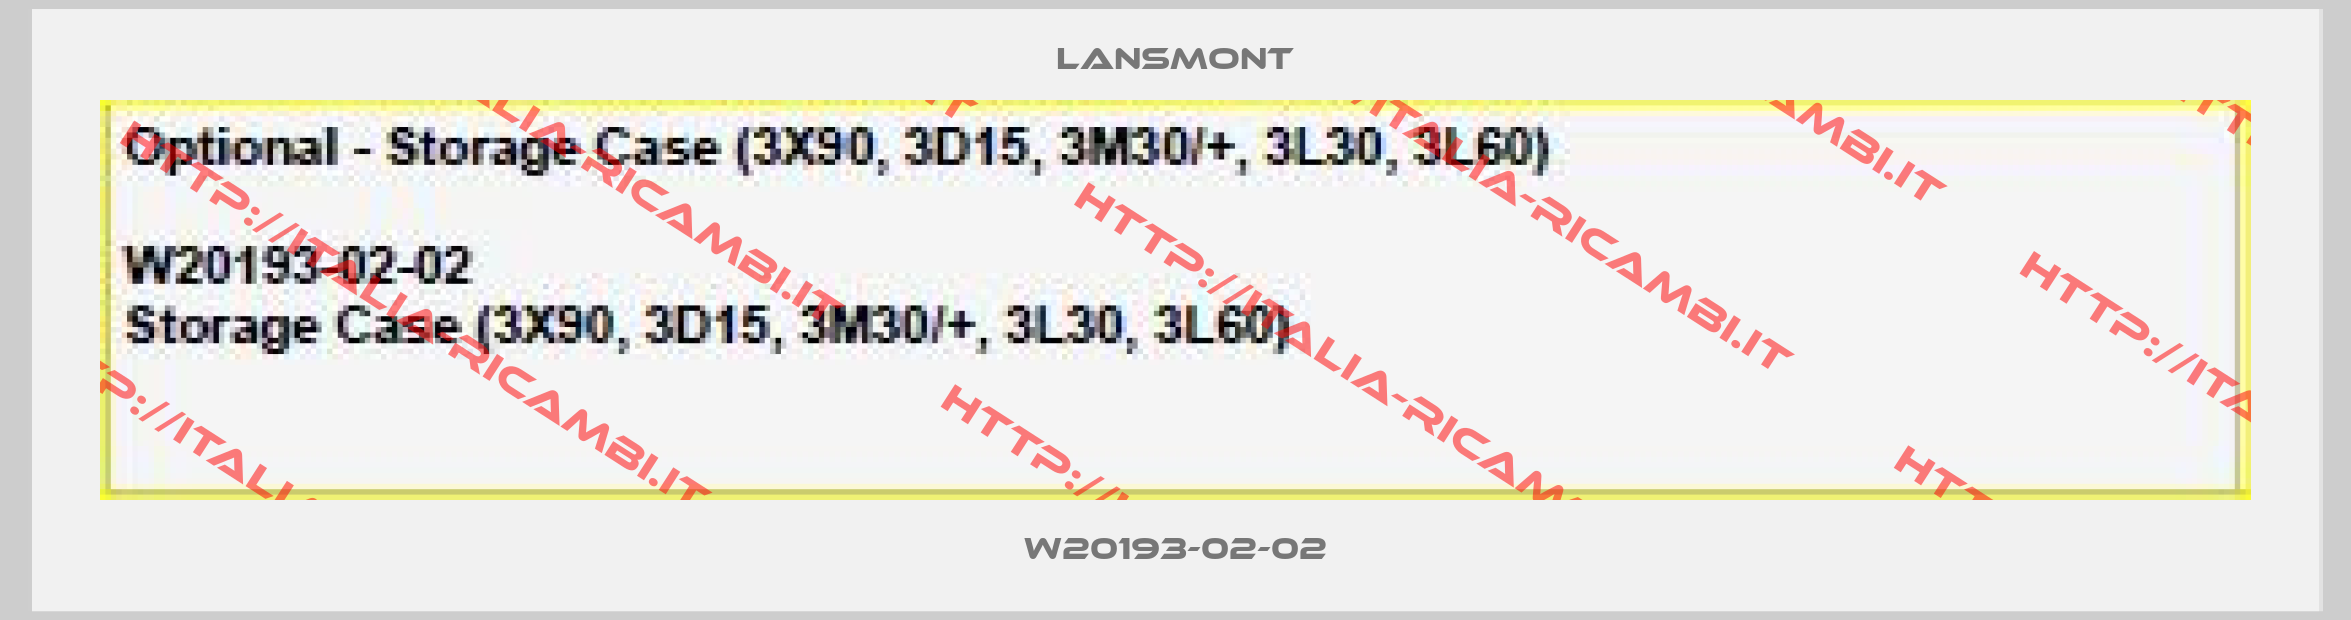 Lansmont-W20193-02-02